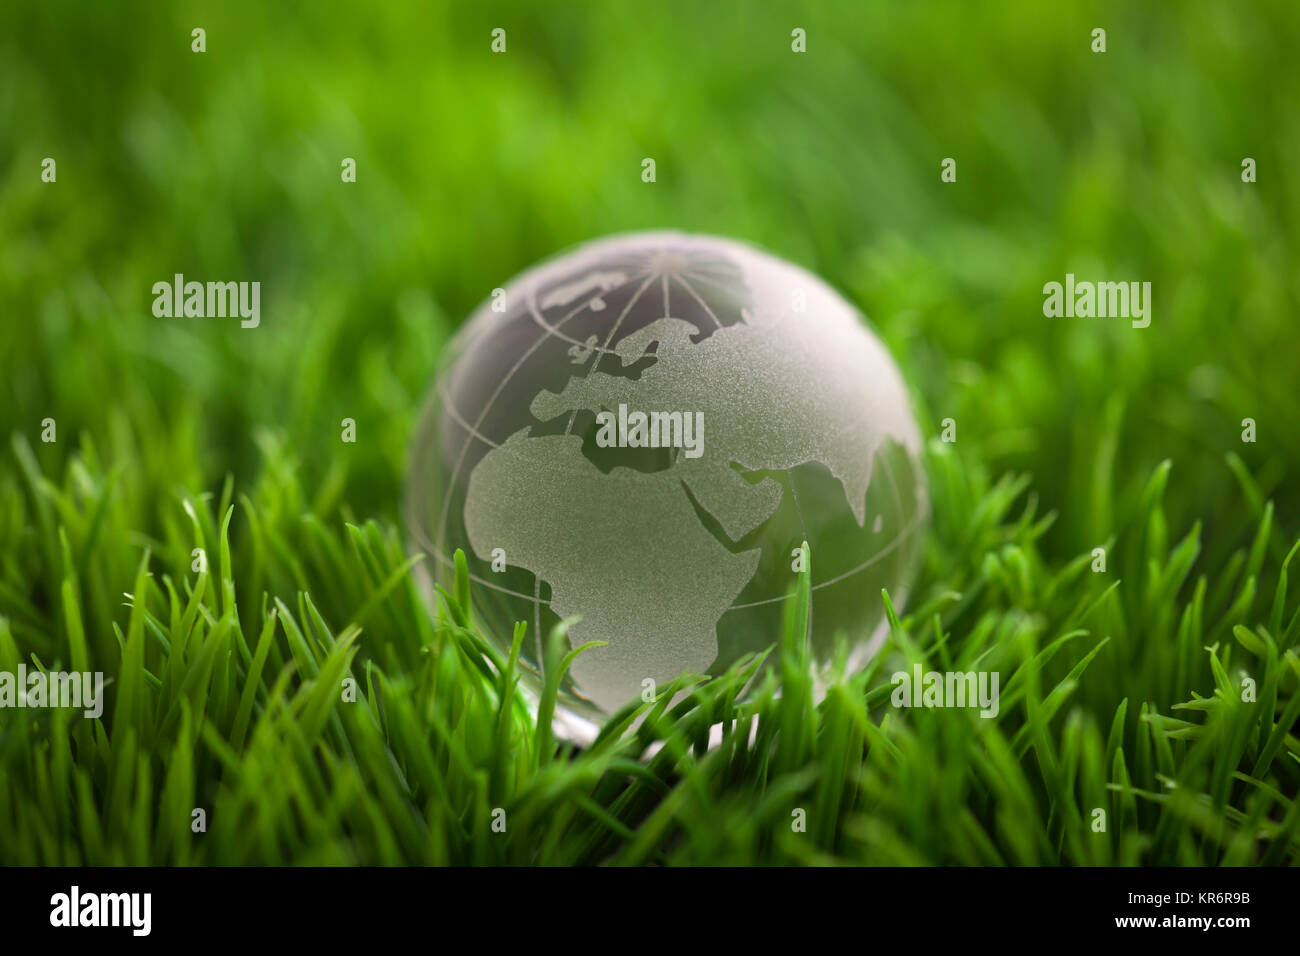 Crystal globe on green grass. World environmental concept. Stock Photo